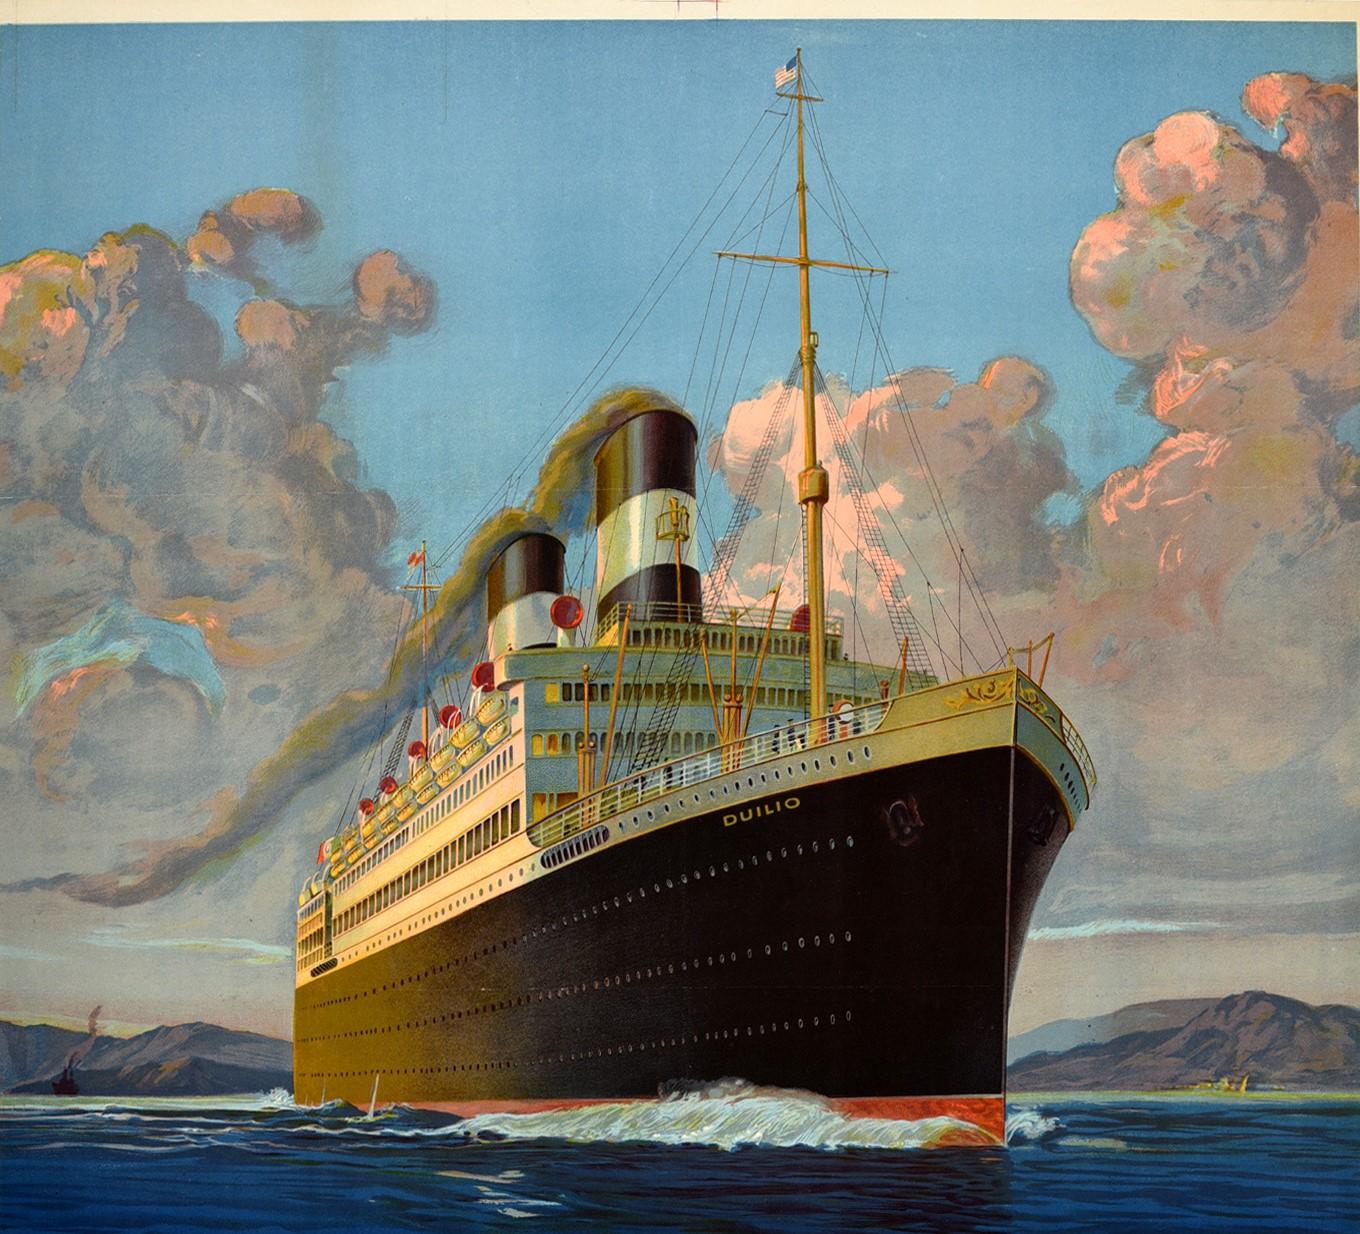 Original Vintage Travel Poster SS Duilio Transatlantic Ocean Liner Mediterranean - Print by Unknown